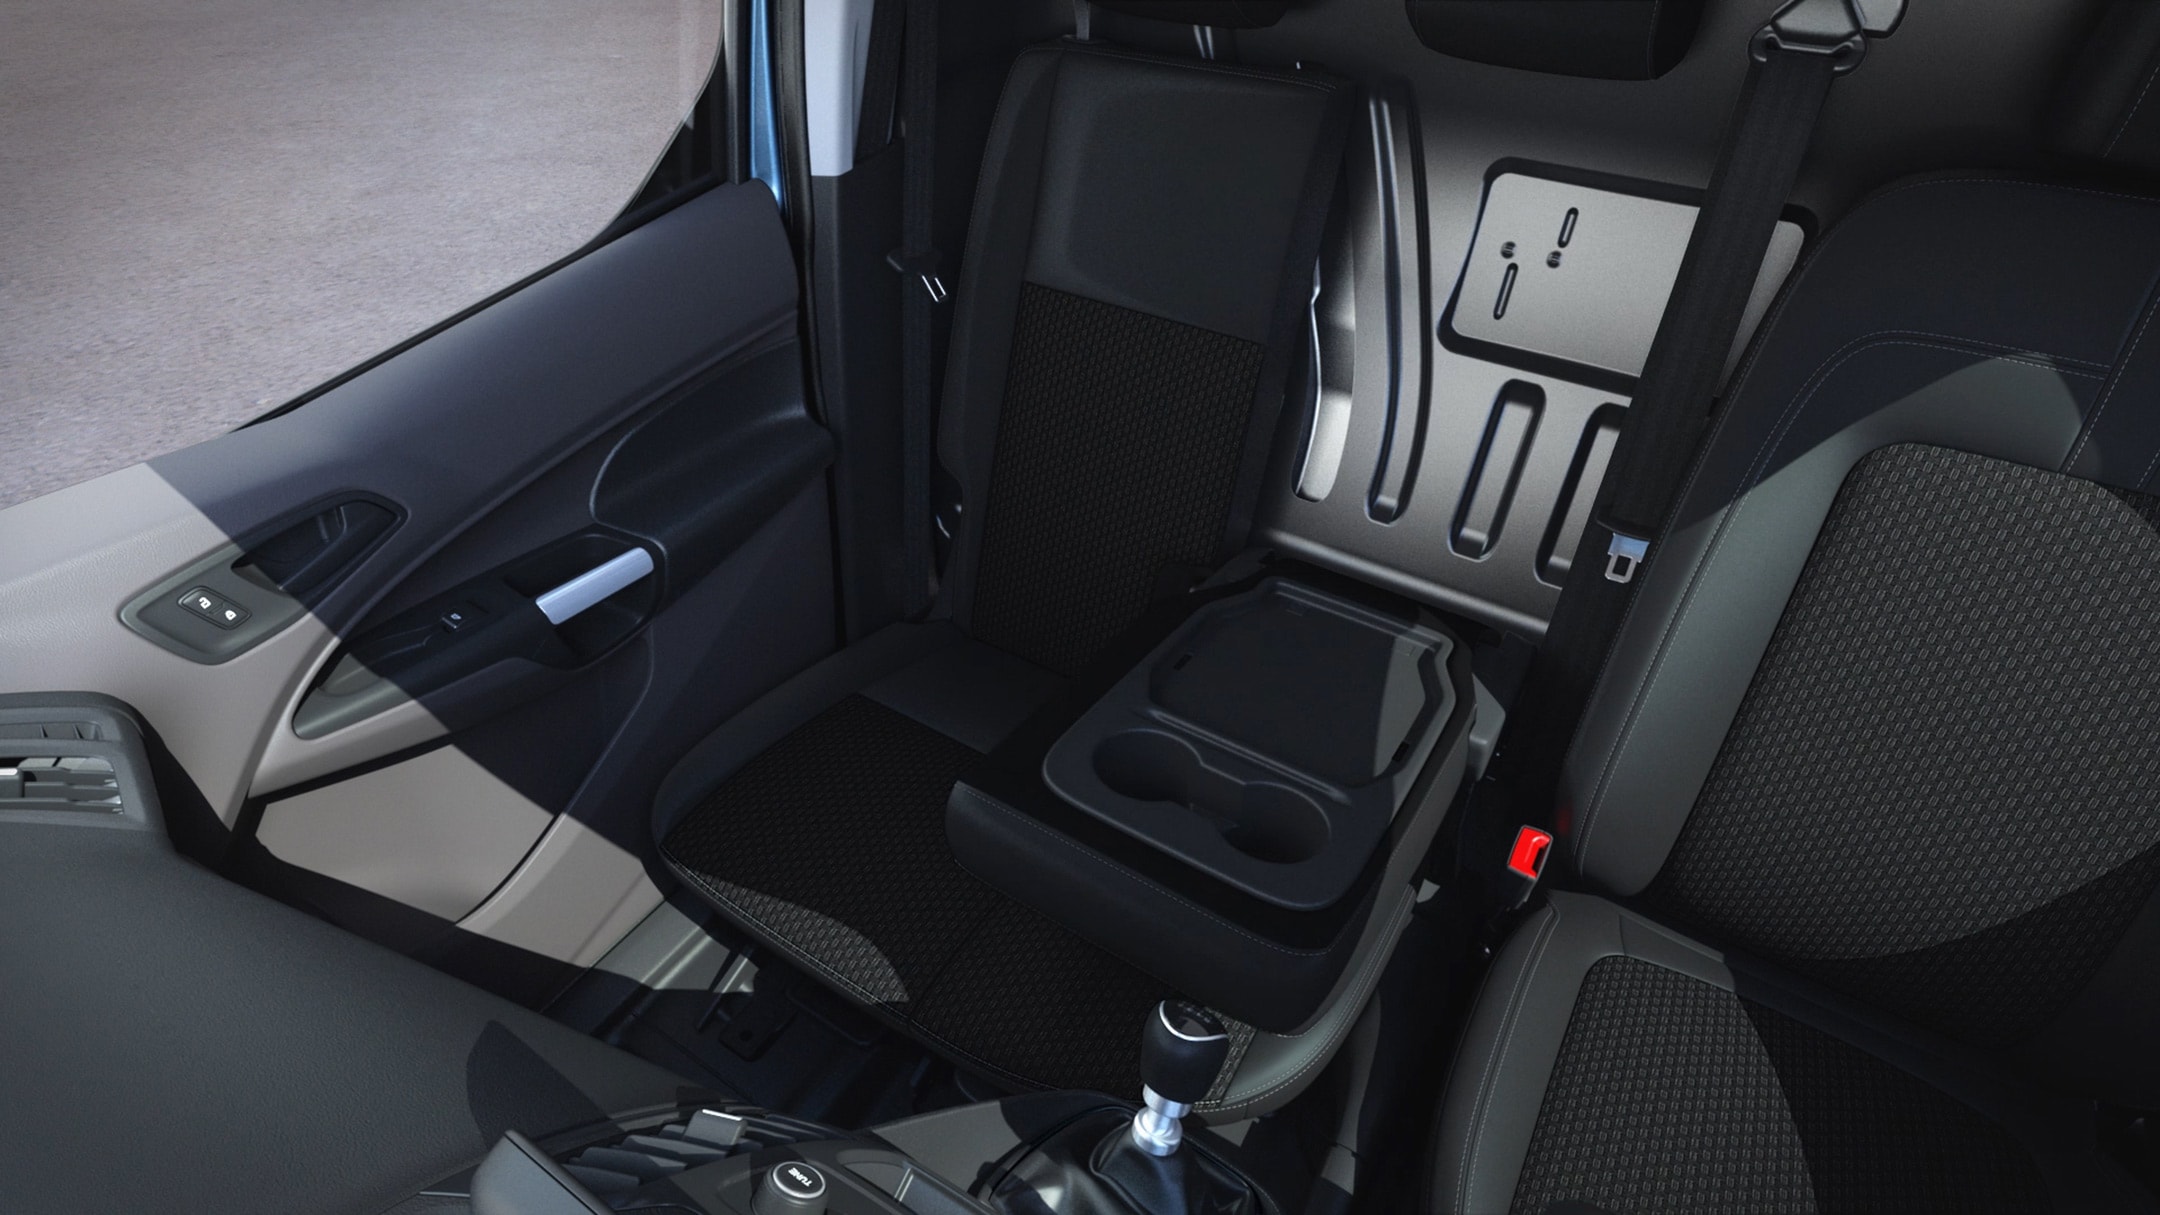 Ford Transit Connect Innenraum. Beifahrer-Doppelsitz im Detail